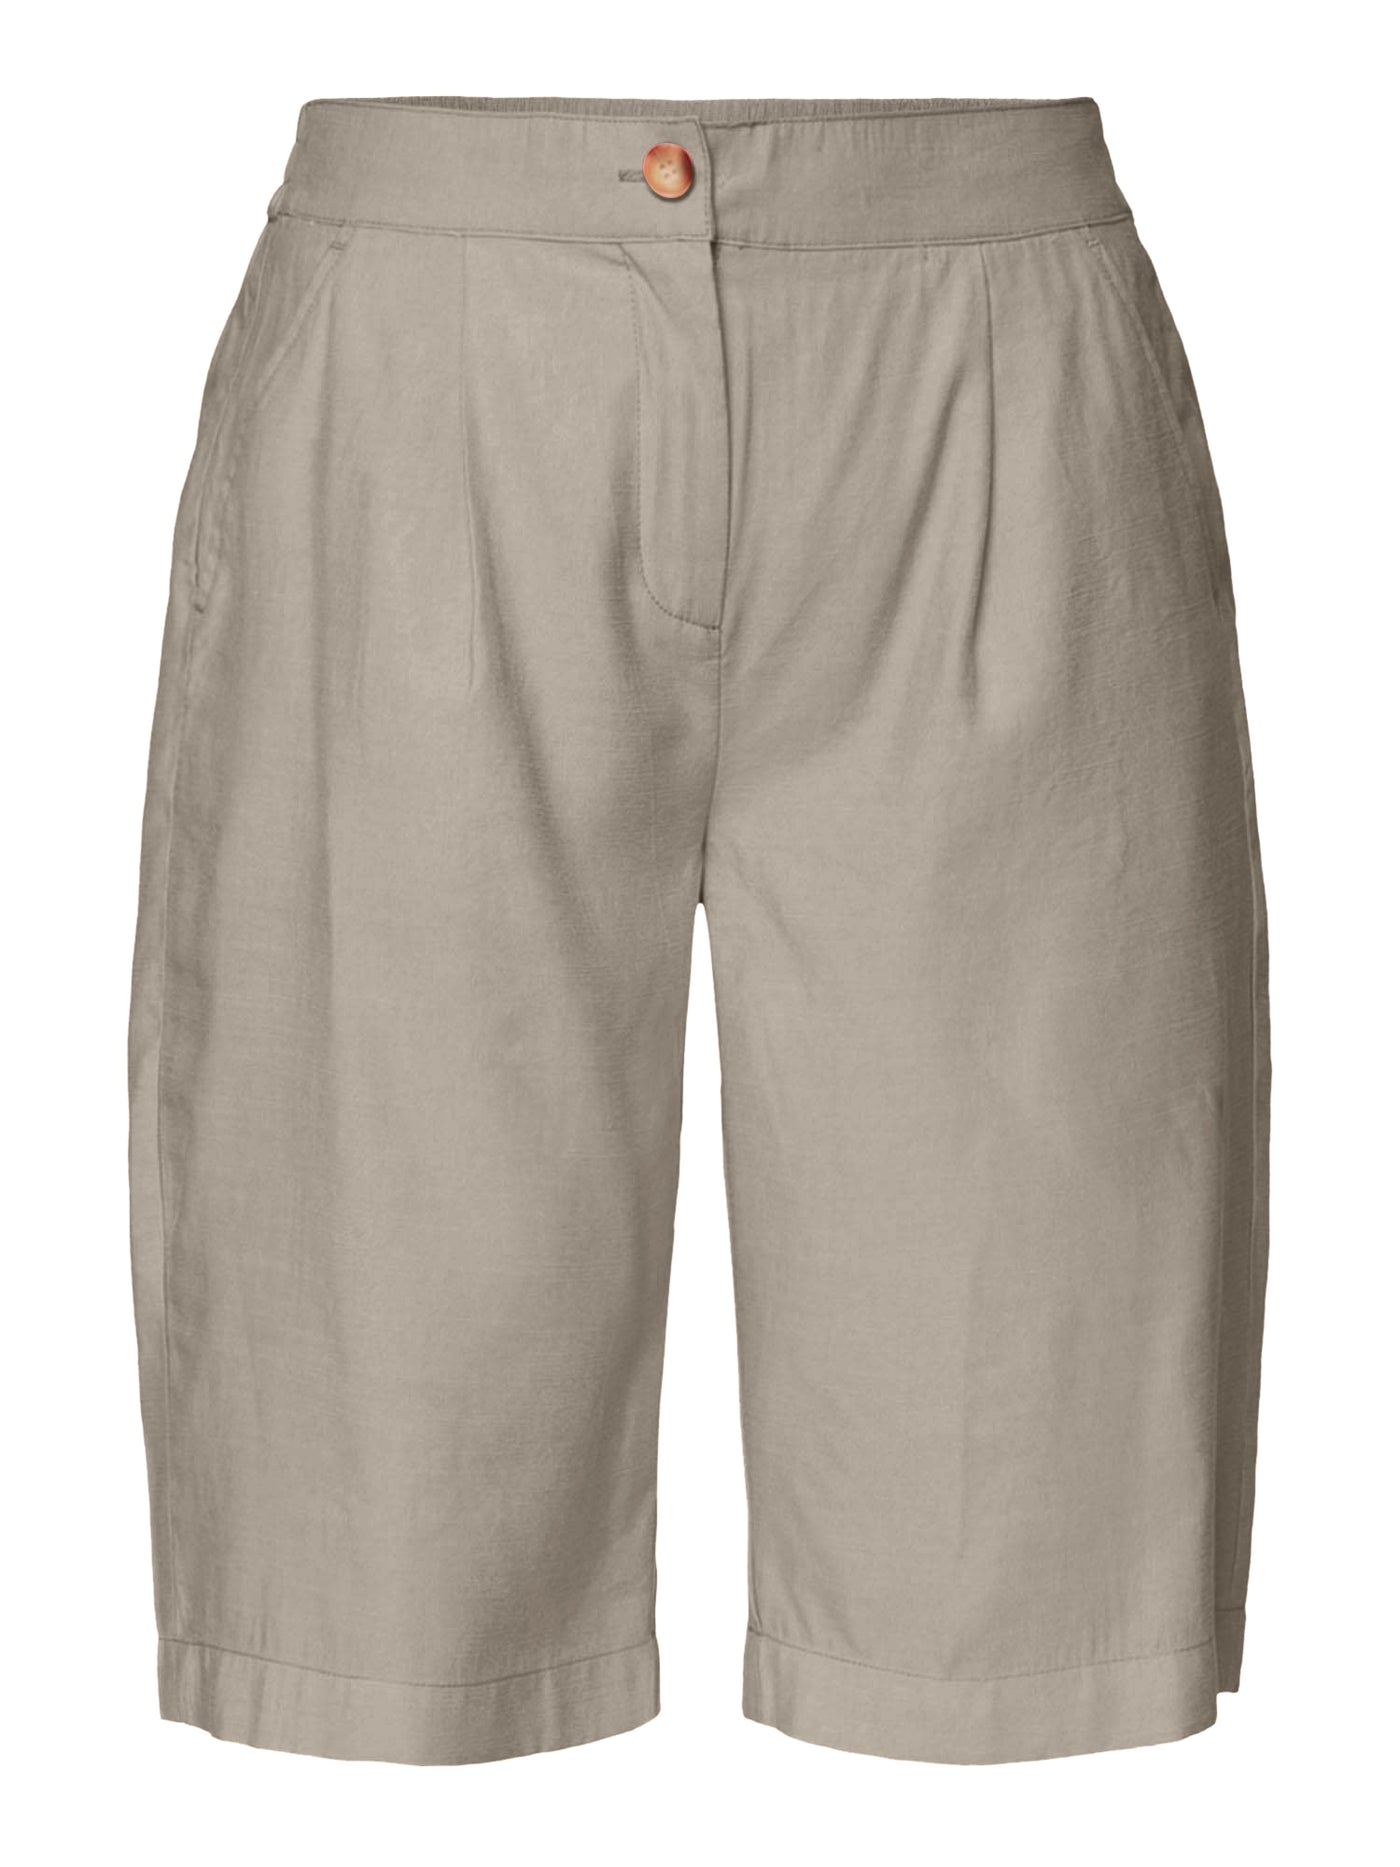 Shorts - Pure Cashmere Sand